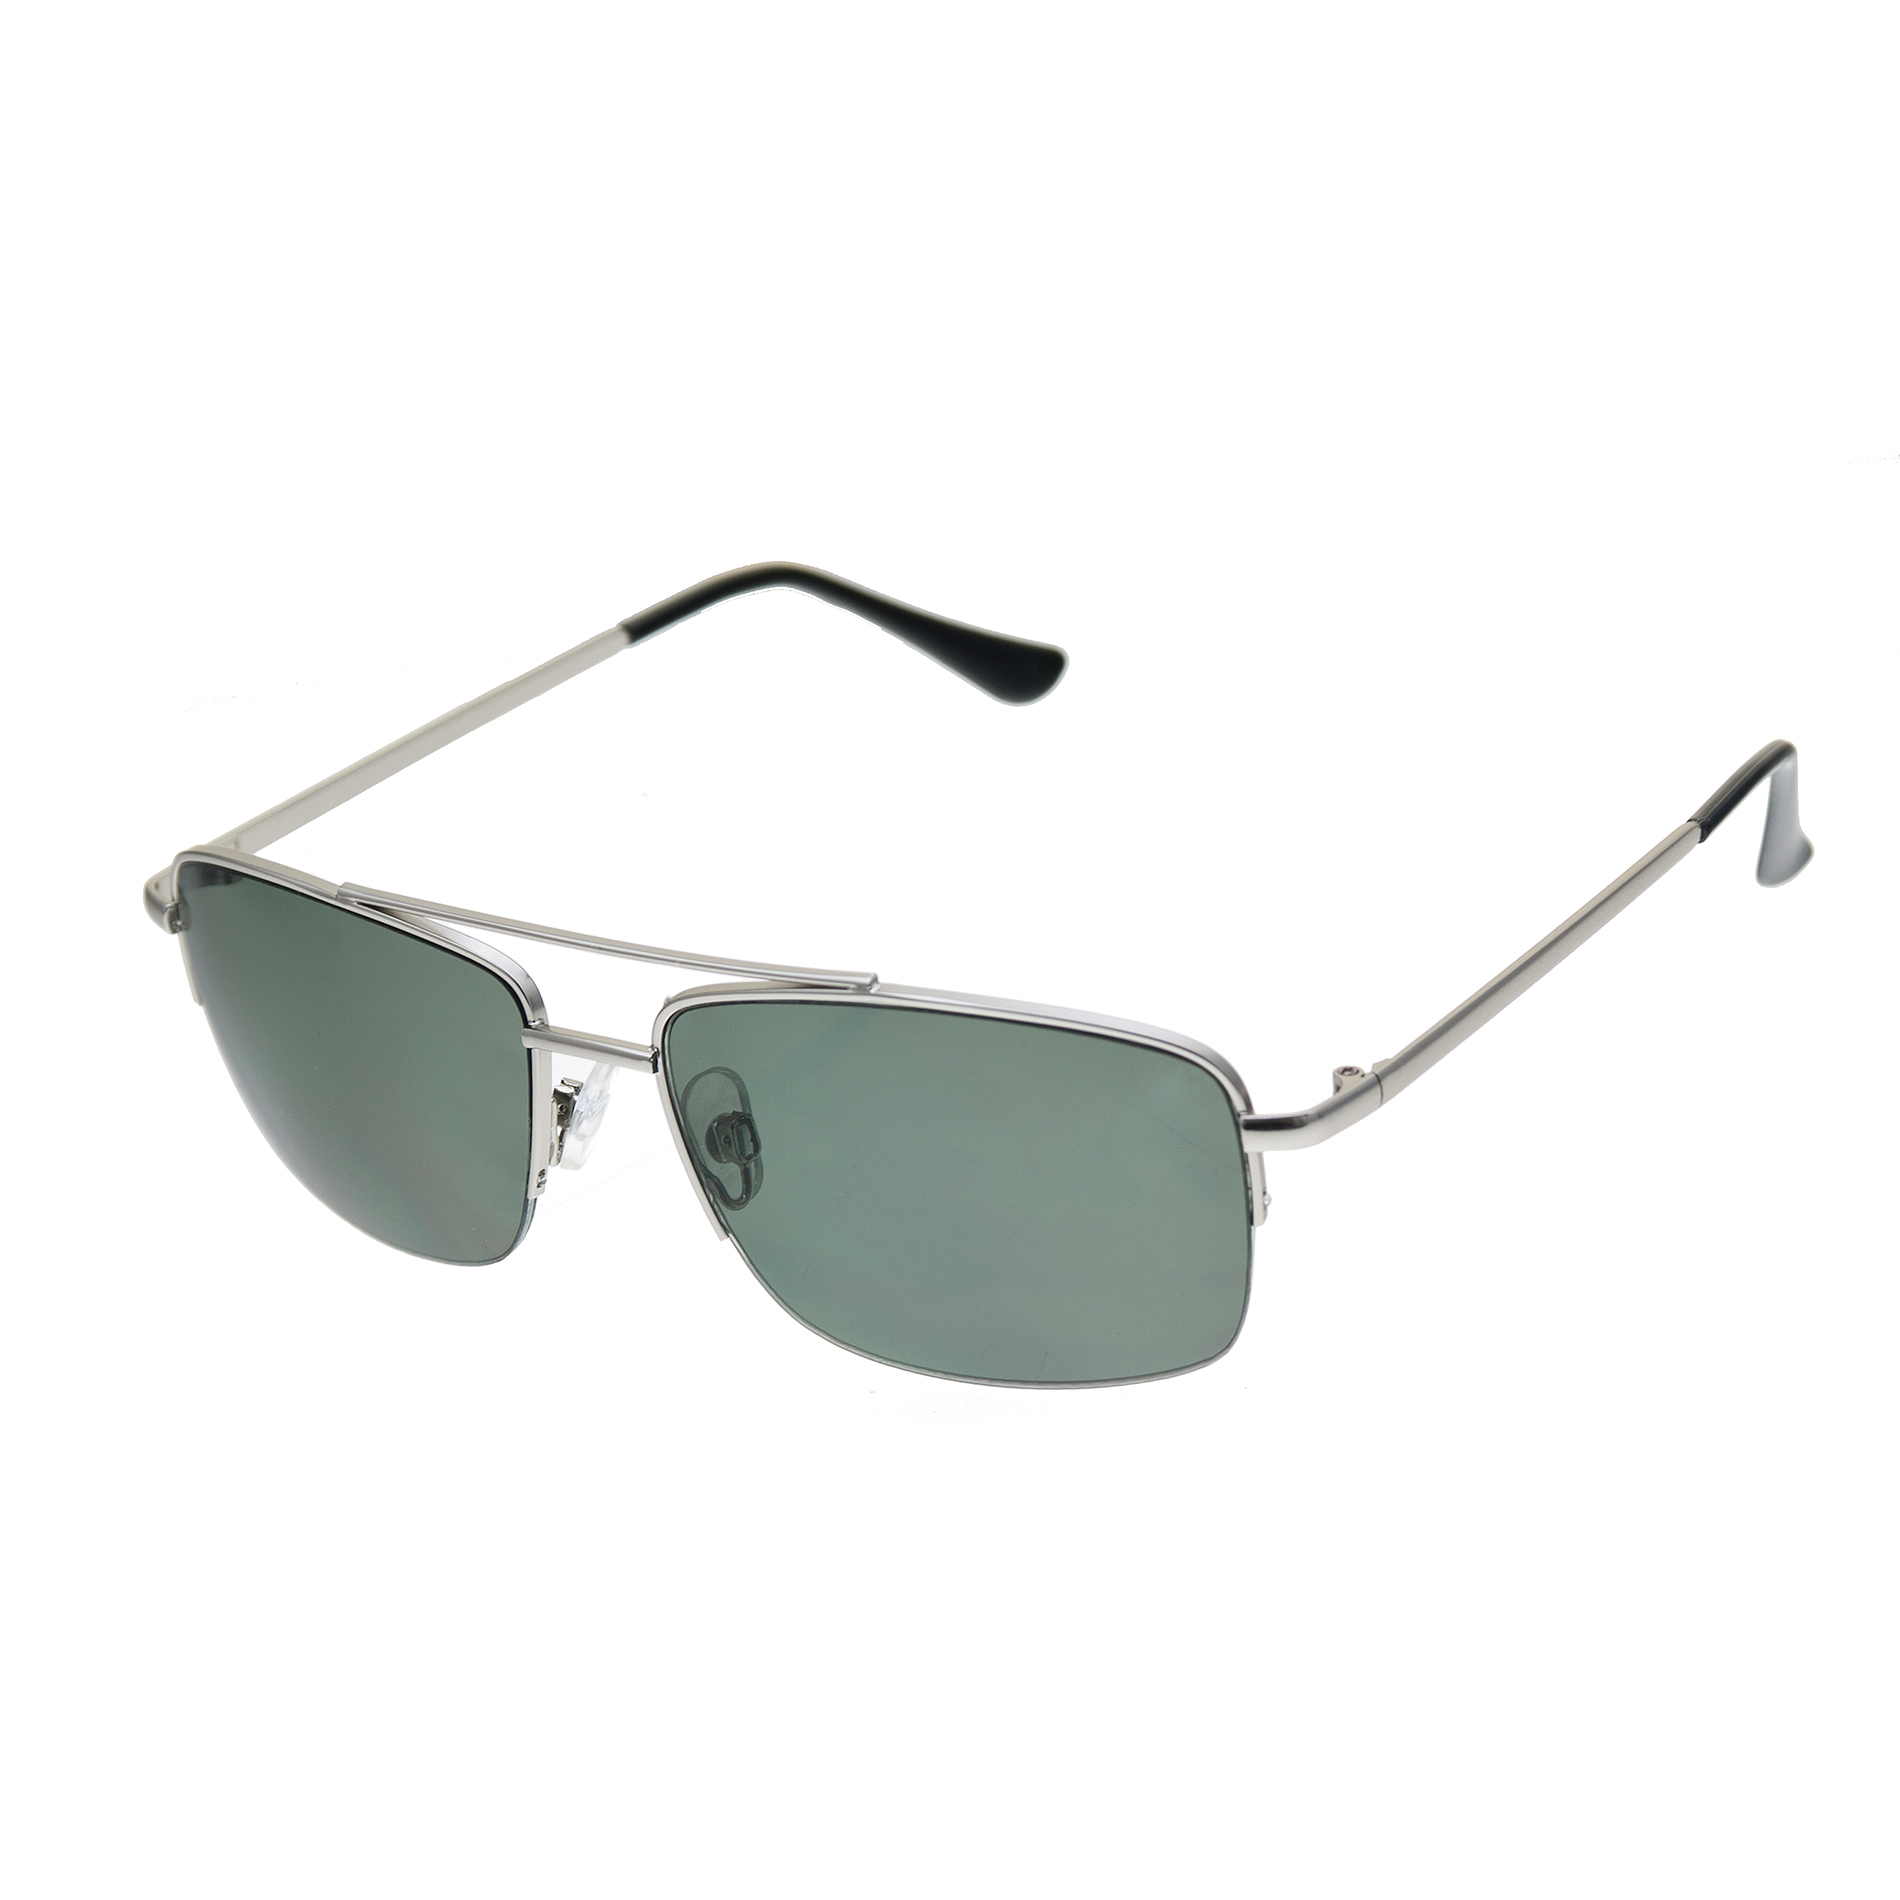 Two-Tone Aviator Sunglasses